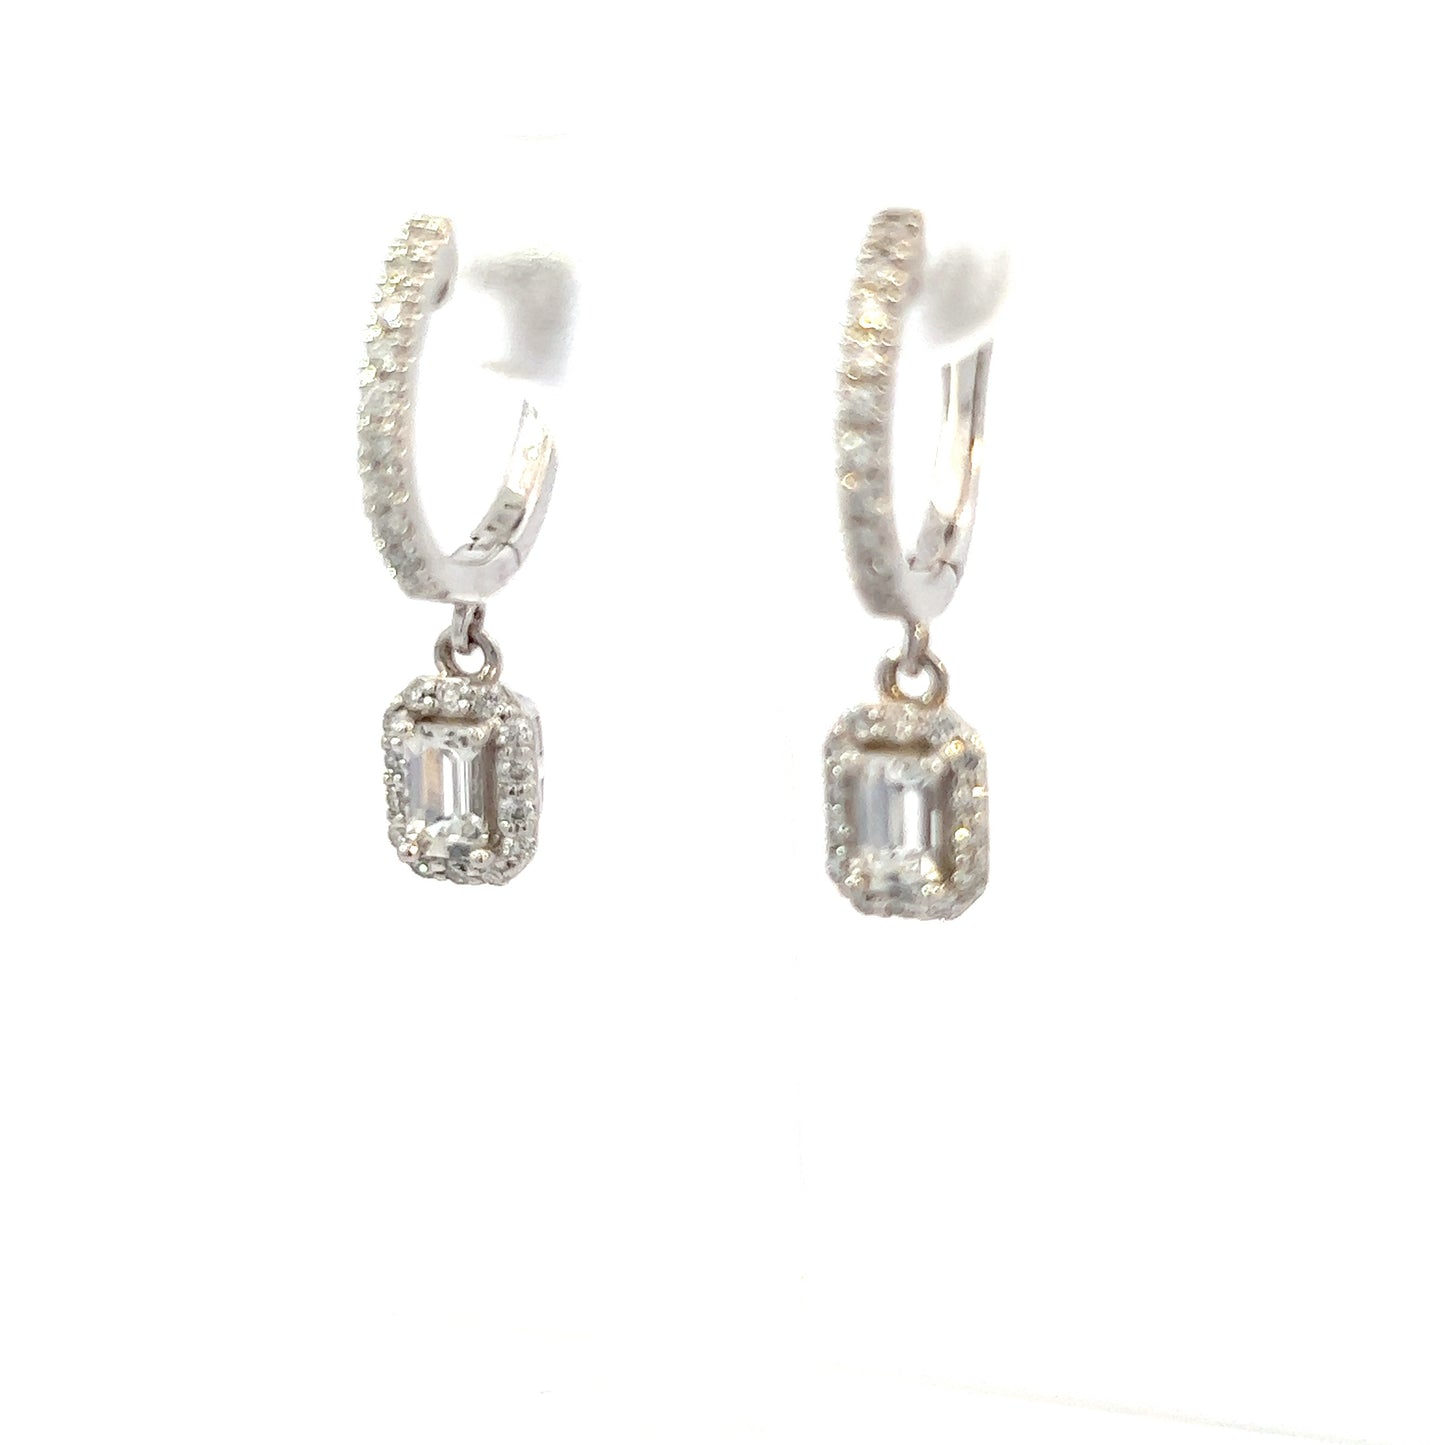 Natural Sapphire Diamond Dangle Earrings 14k WG 1.16 TCW Certified $4,250 211177